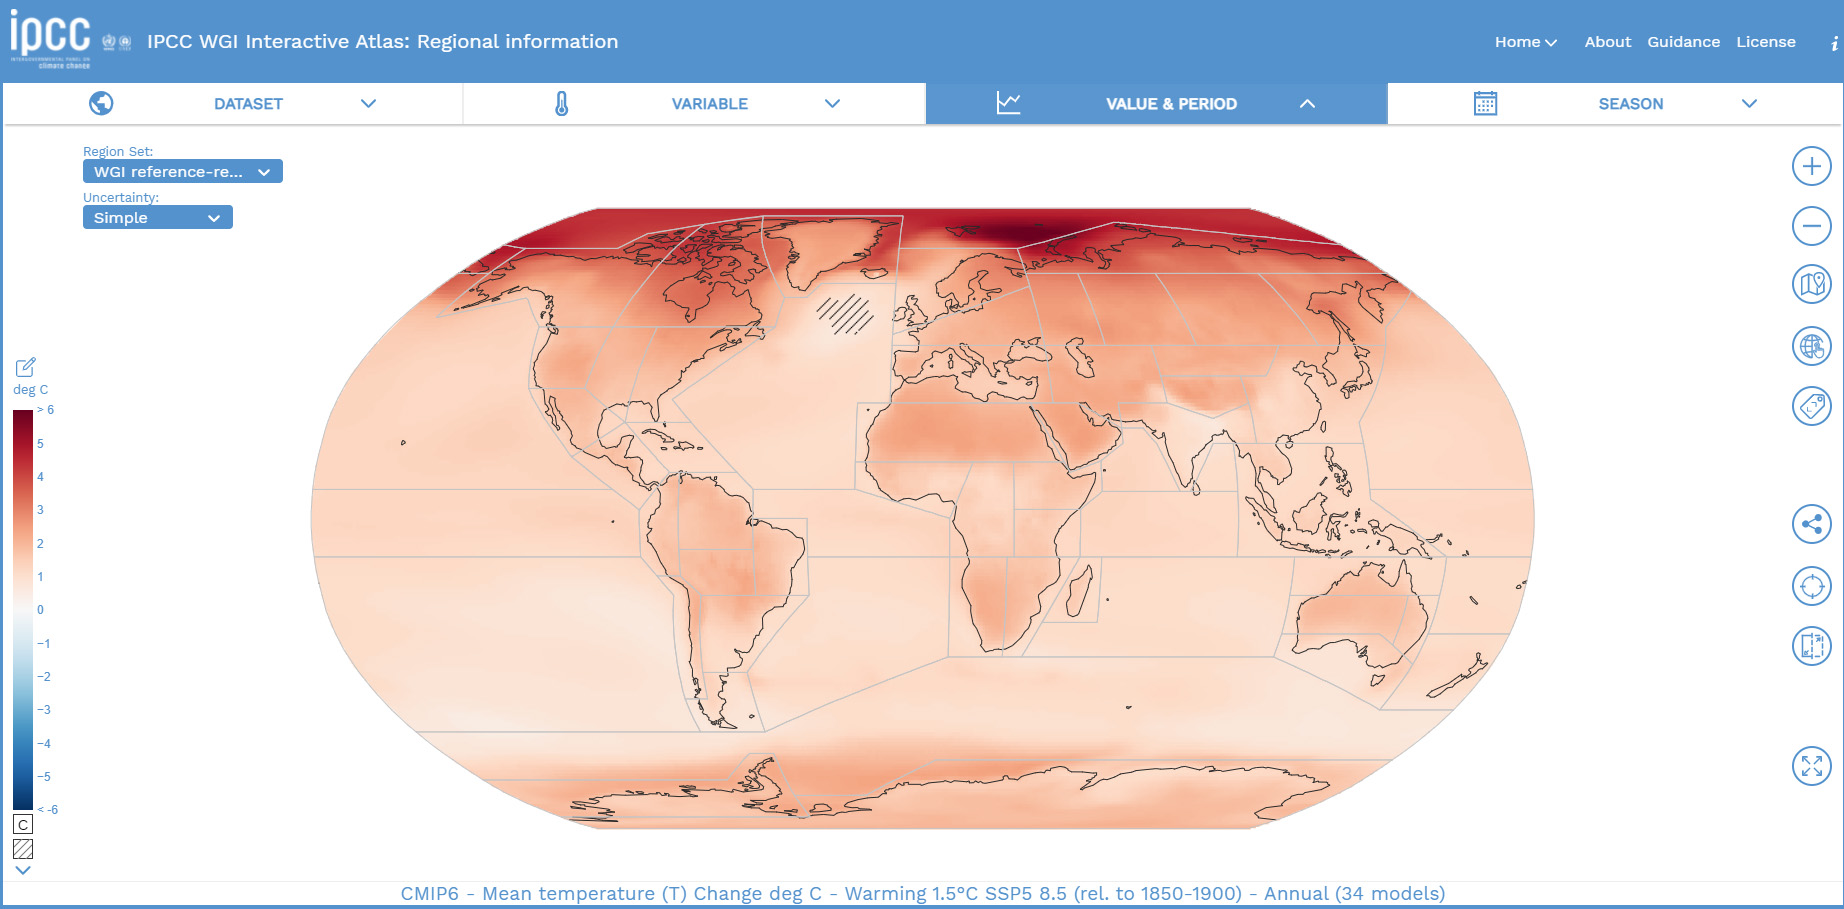 A screenshot of the IPCC Atlas interface